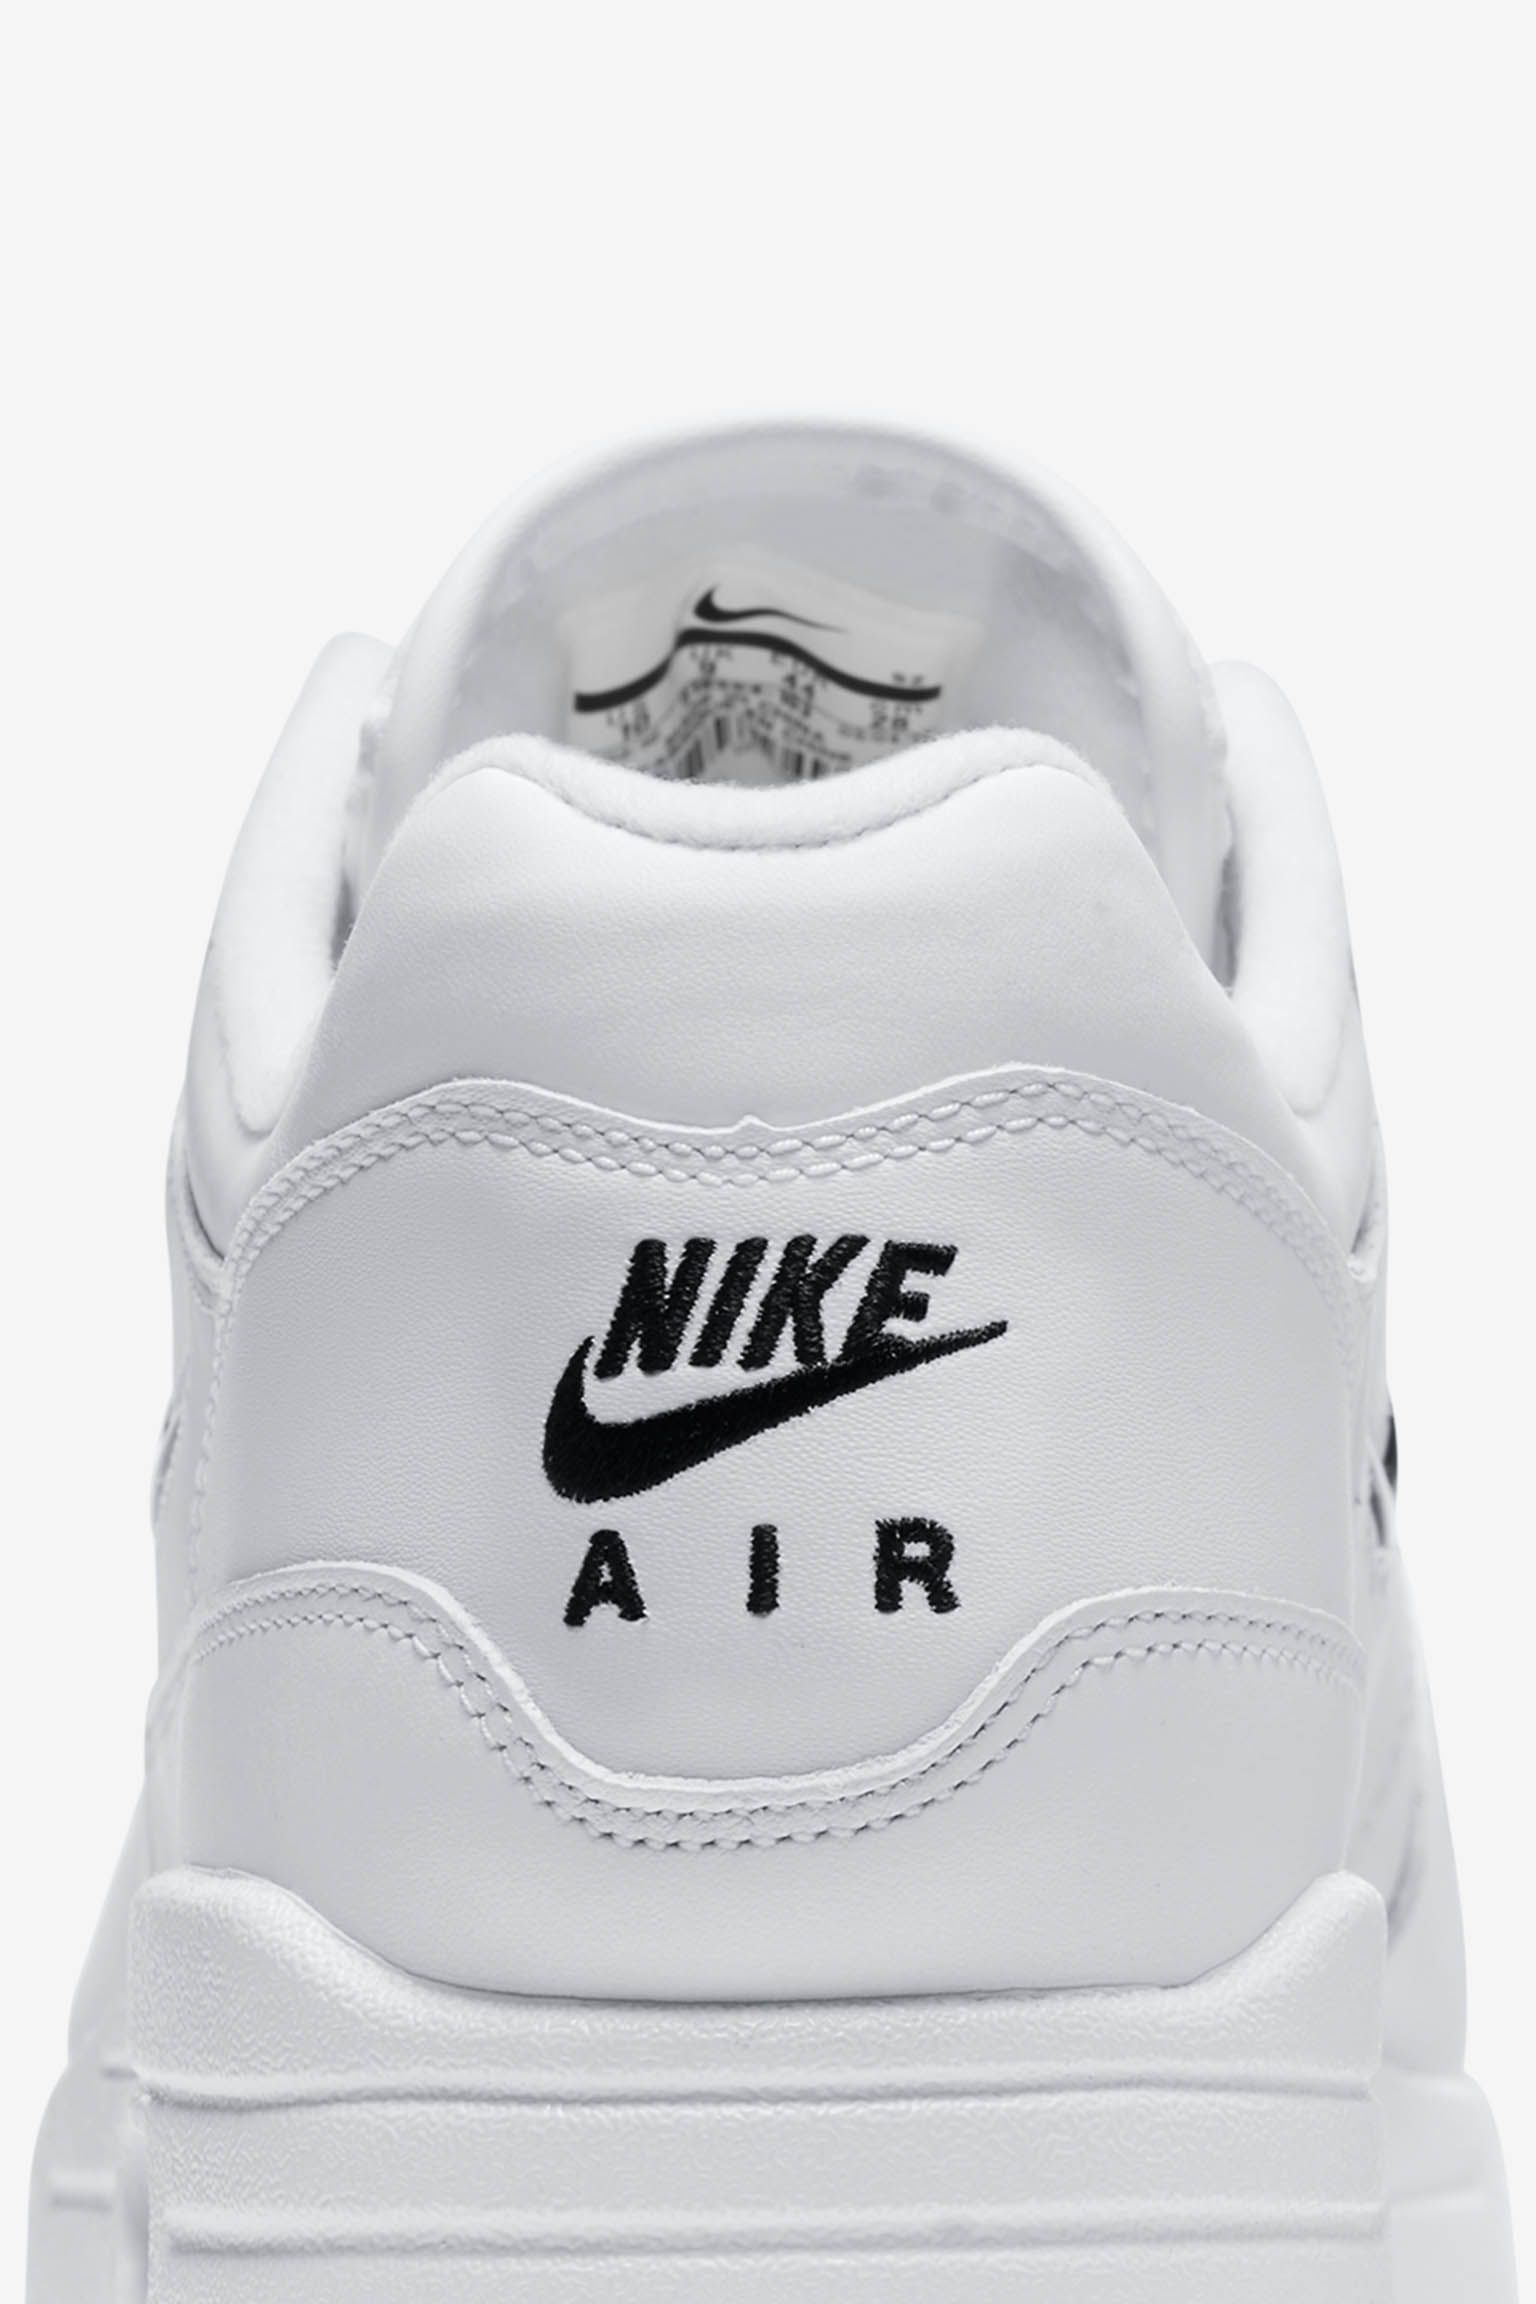 كاس شرب Air Max 1 Premium Jewel 'White & Black' Release Date. Nike SNKRS كاس شرب